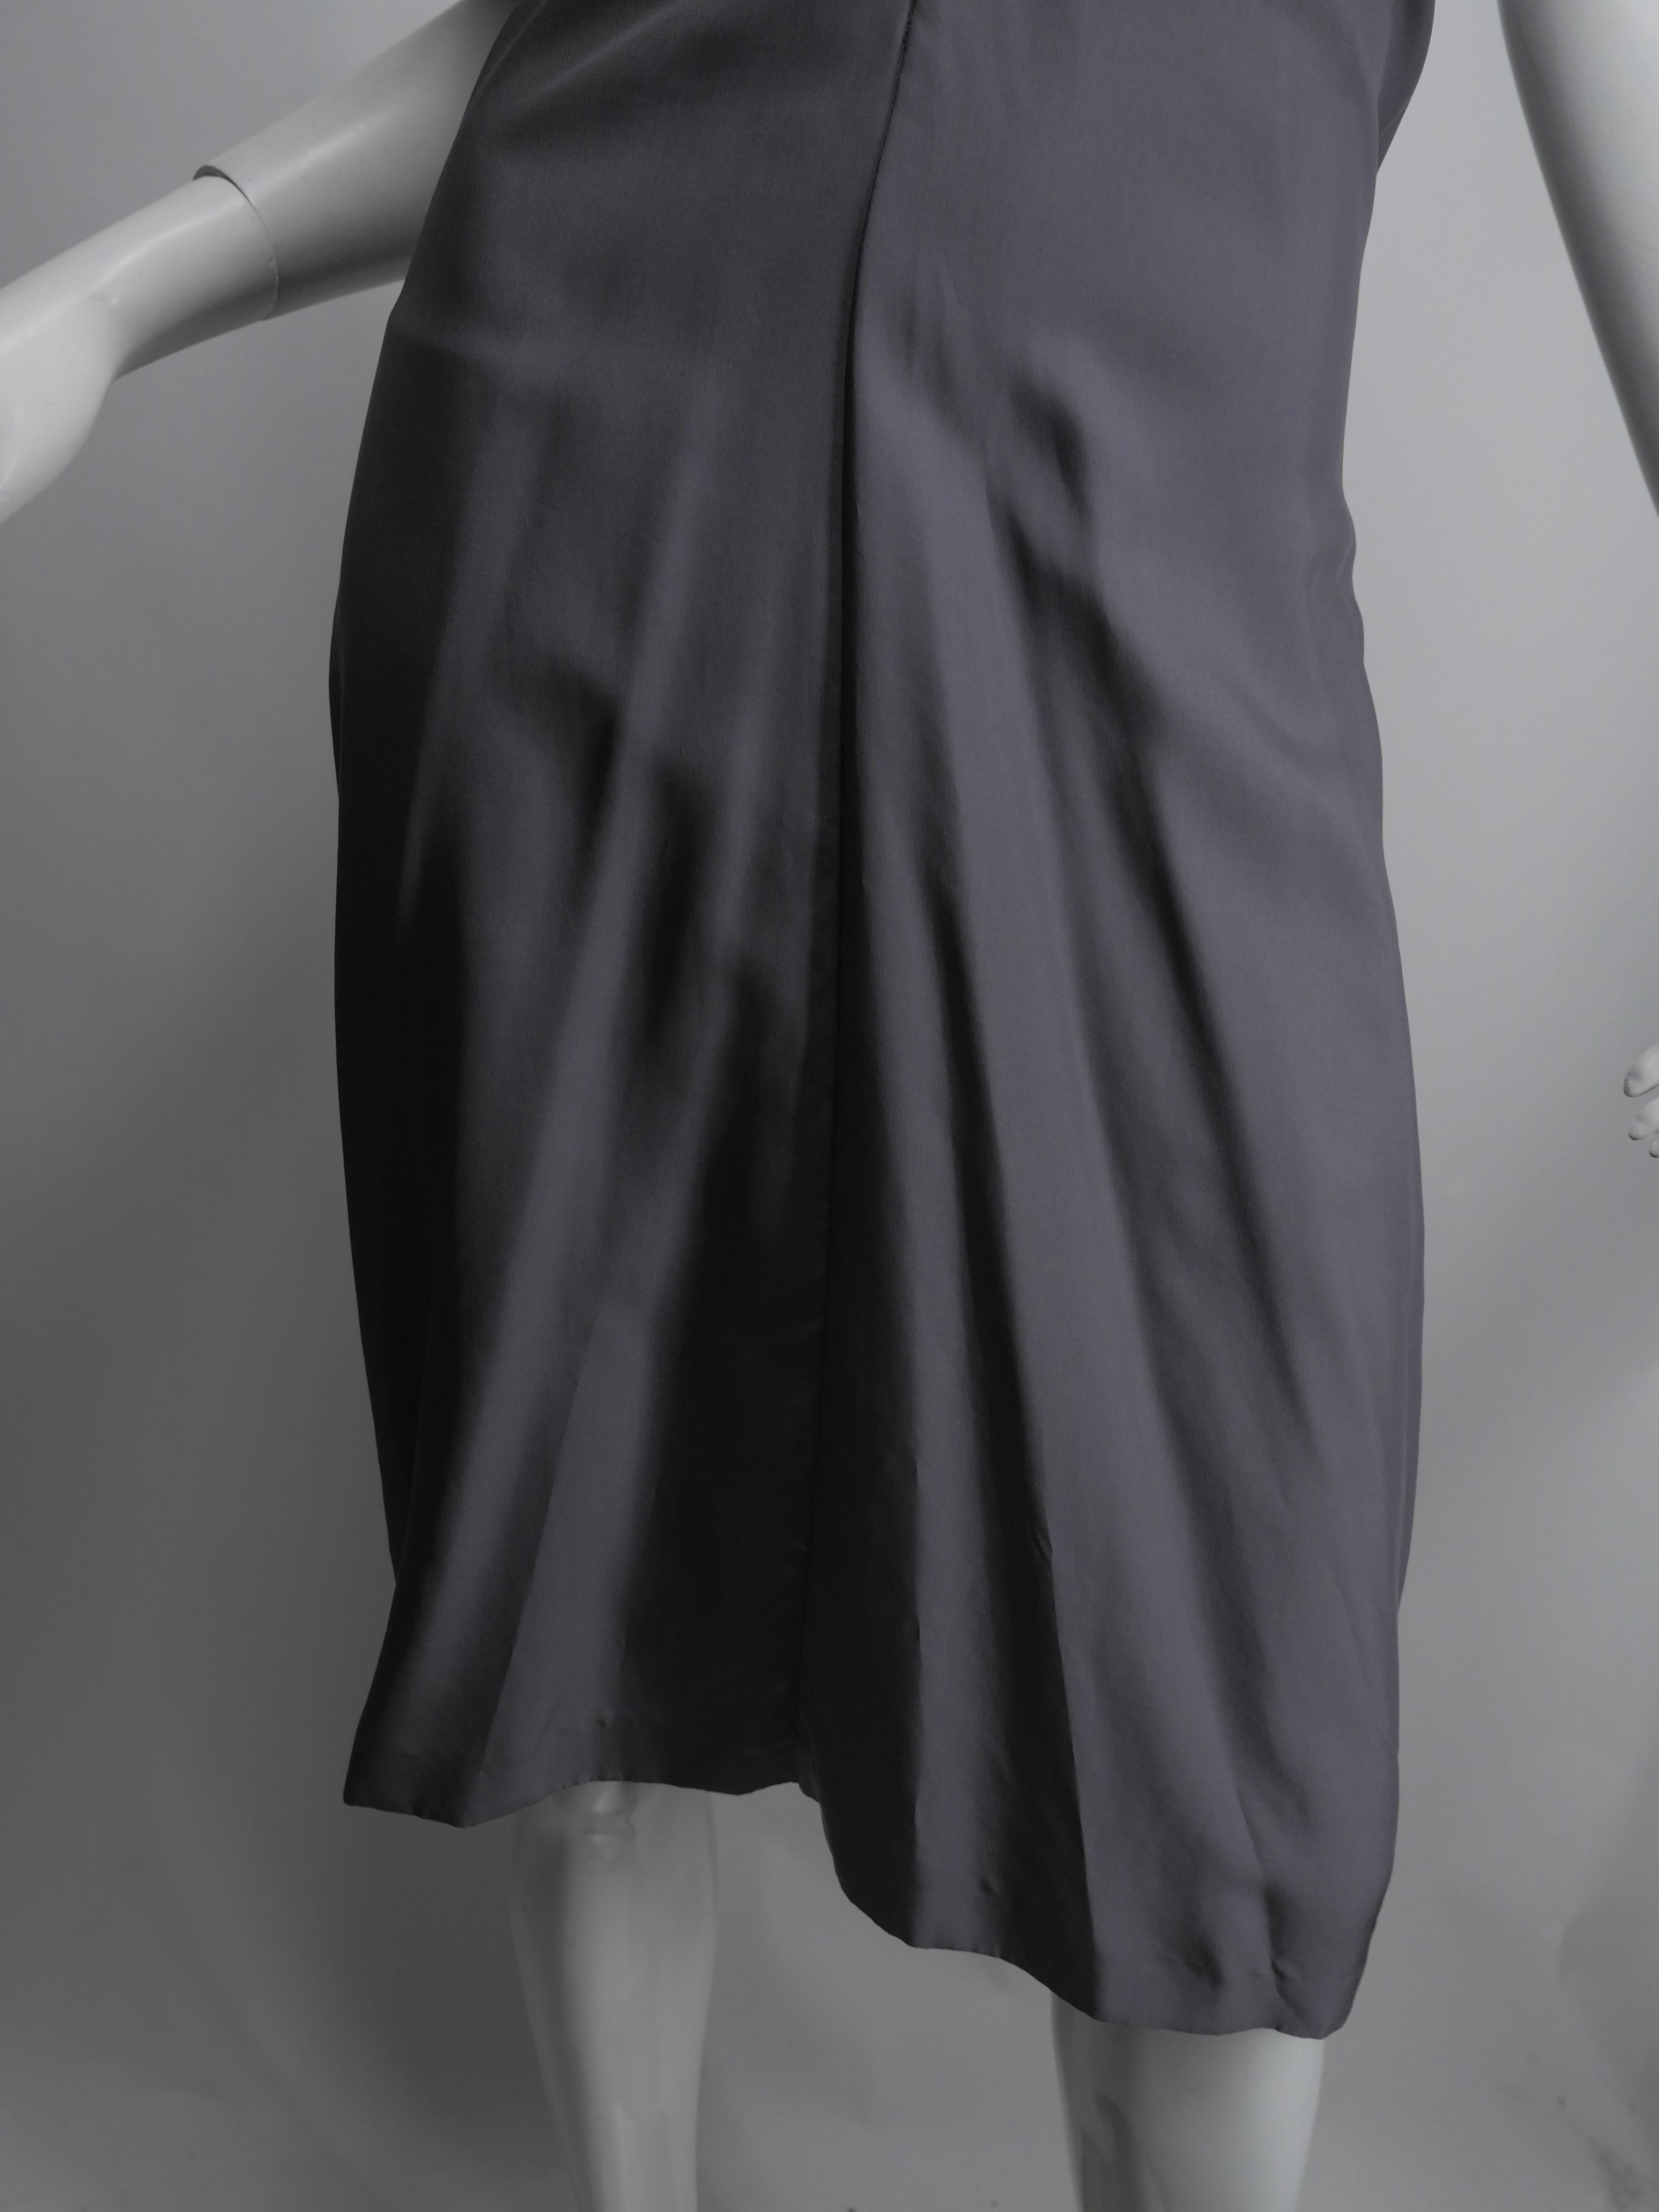 Yves Saint Laurent Silver Silk Halter Dress In Good Condition In Bridgehampton, NY